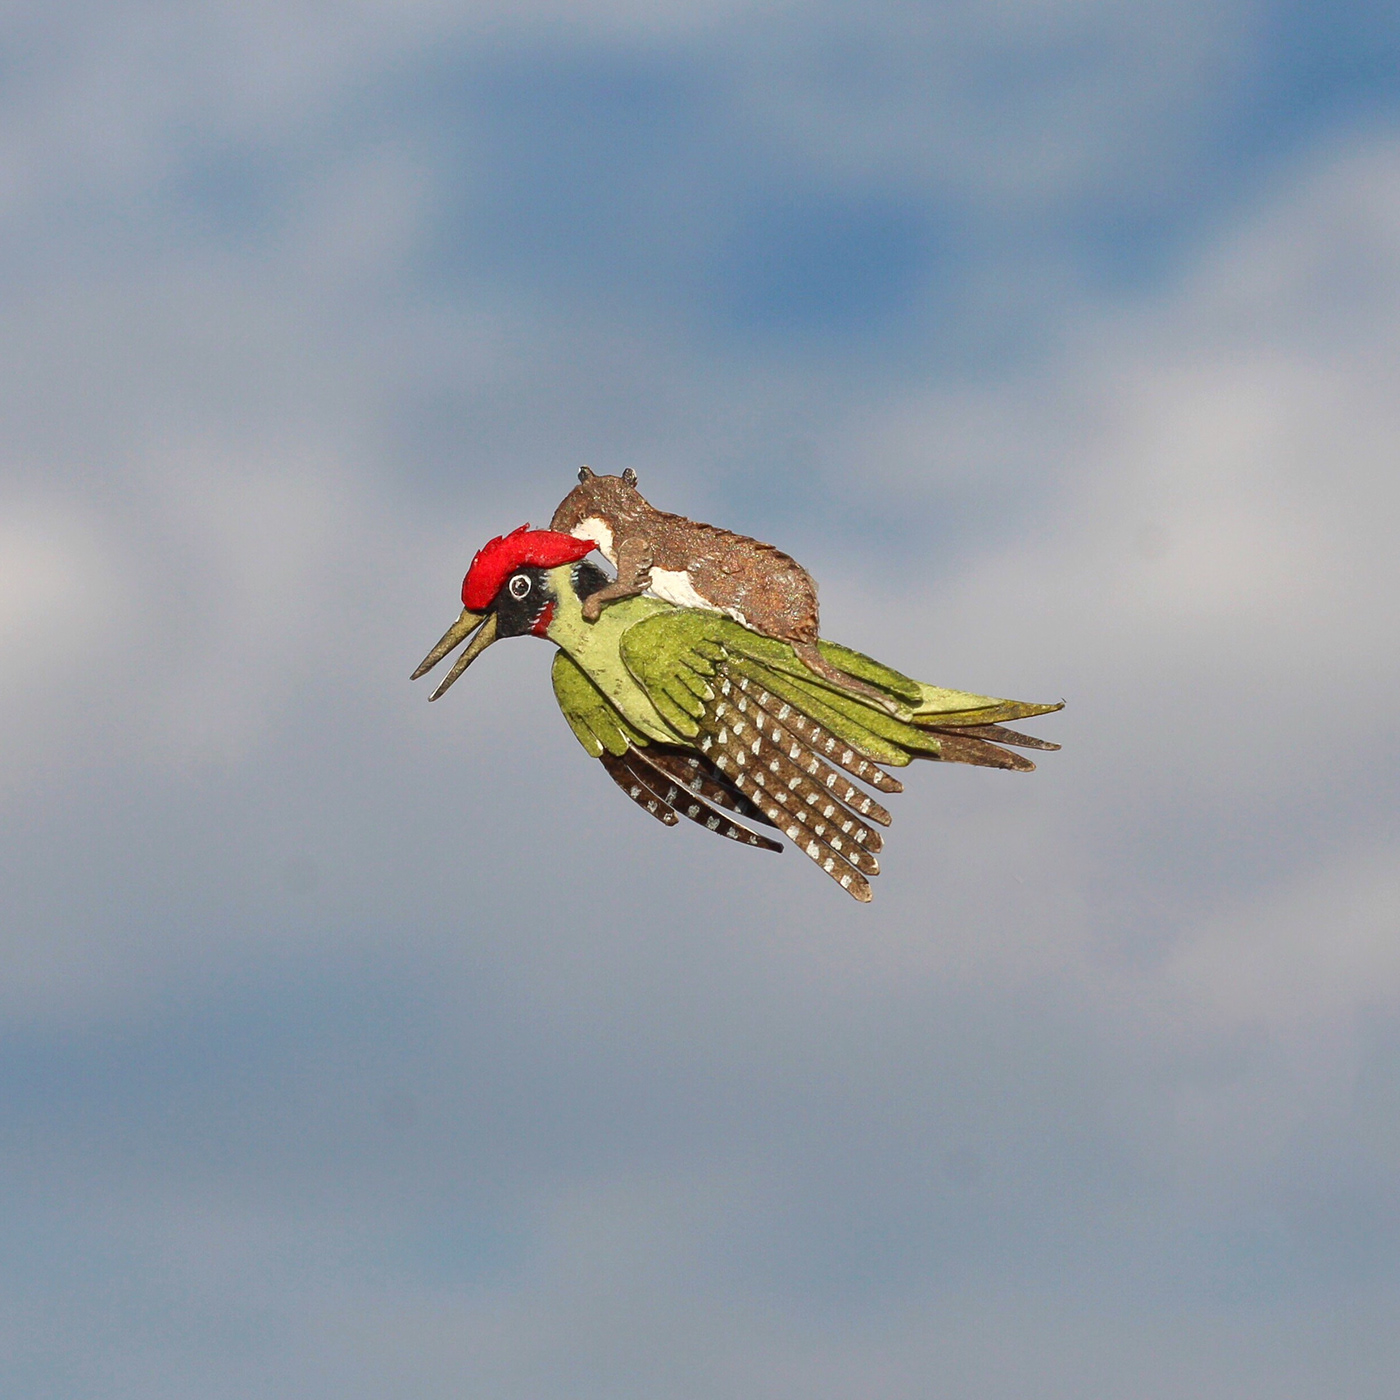 Baby Weasel riding a Green Woodpecker | Behance